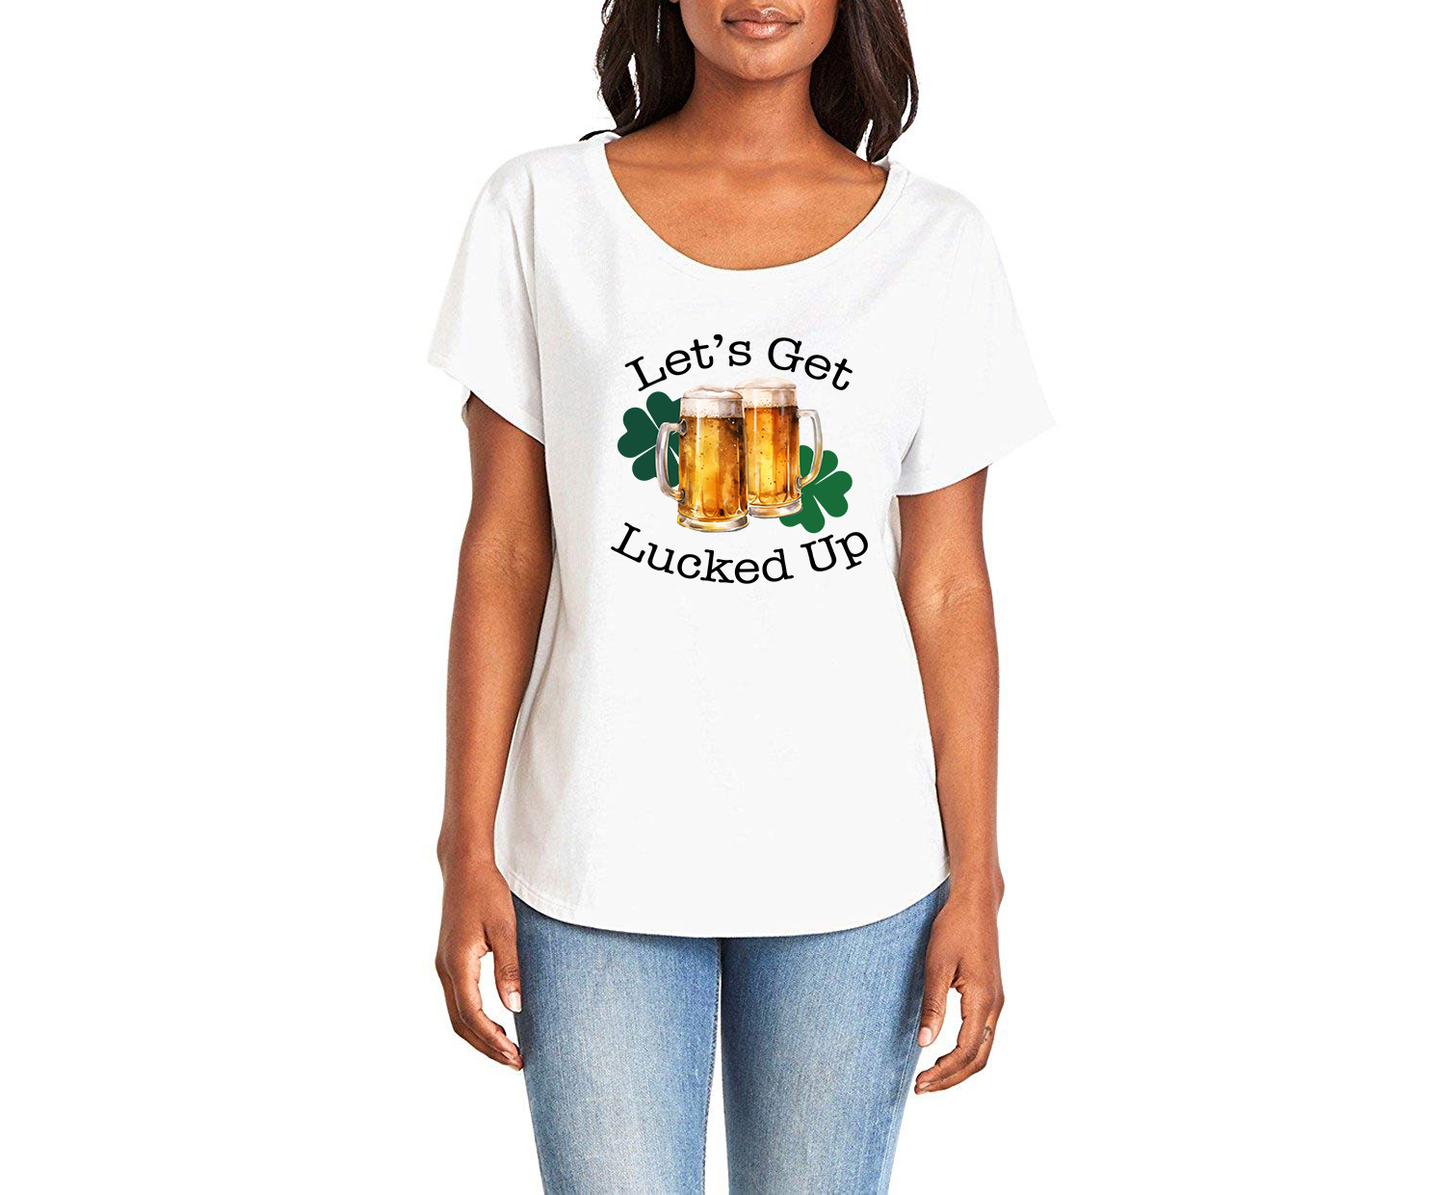 Let's Get Lucked Up Beer Ladies Tee Shirt - In Grey & White